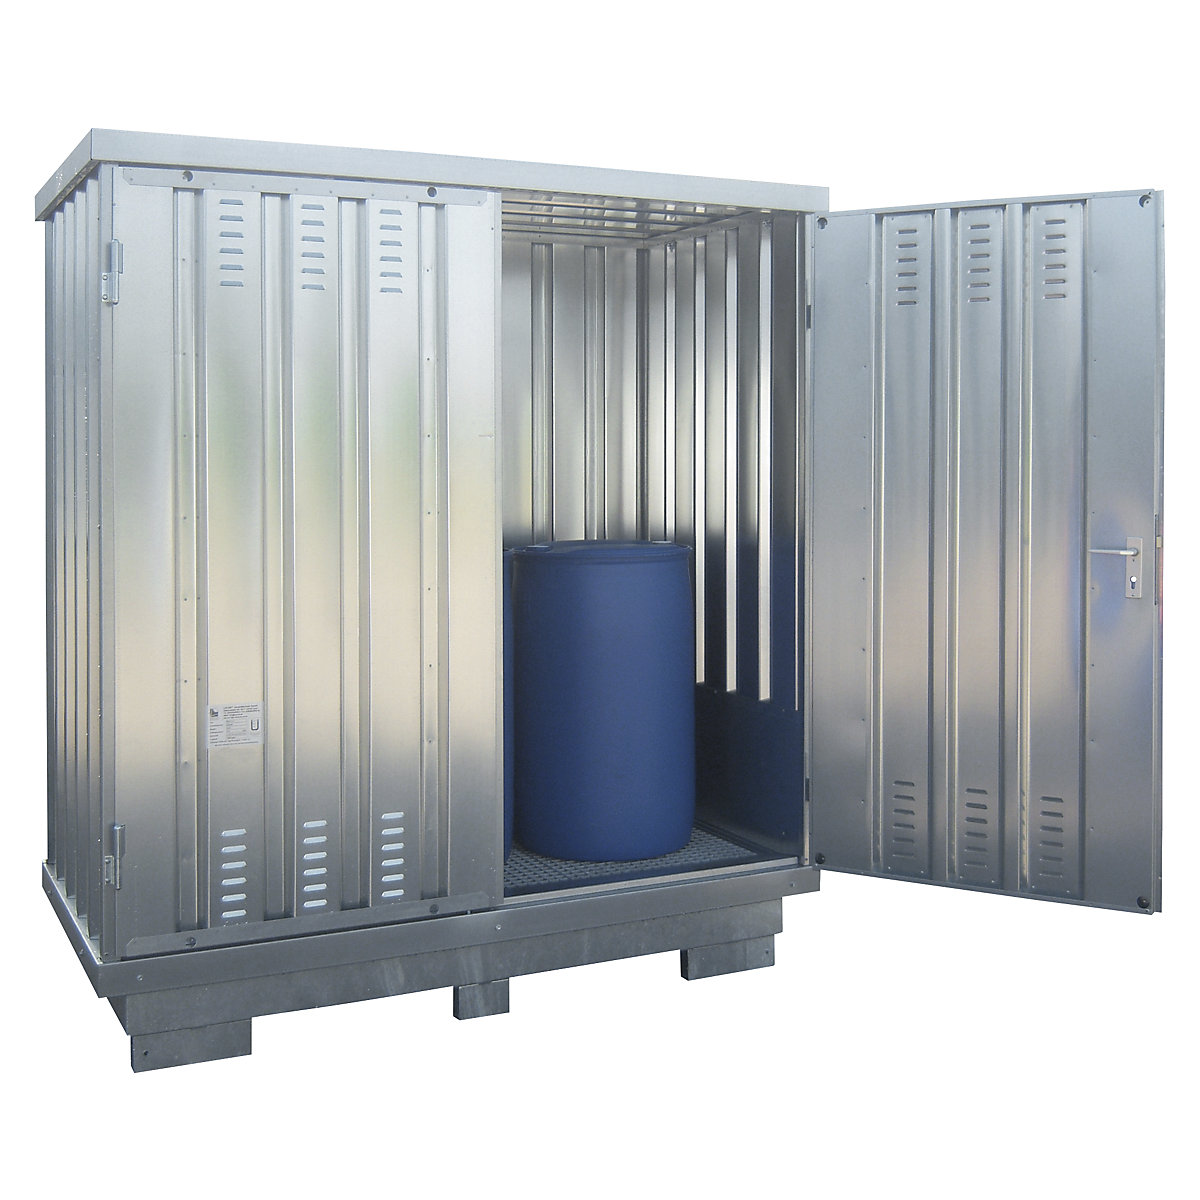 Hazardous goods storage container for water hazardous media, external HxWxD 2385 x 2075 x 1075 mm, zinc plated